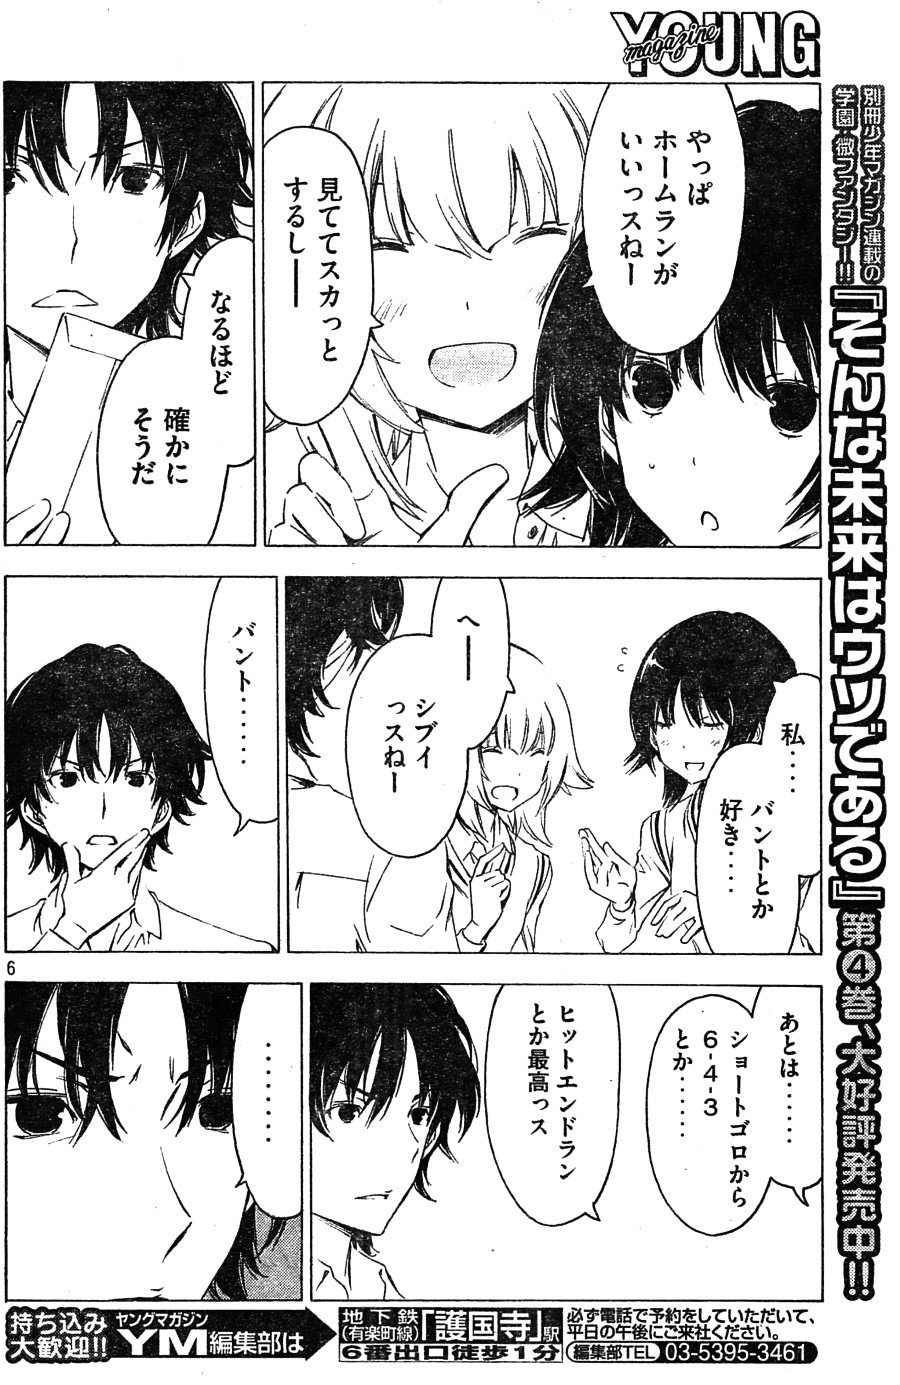 Minami-ke - Chapter 273 - Page 6